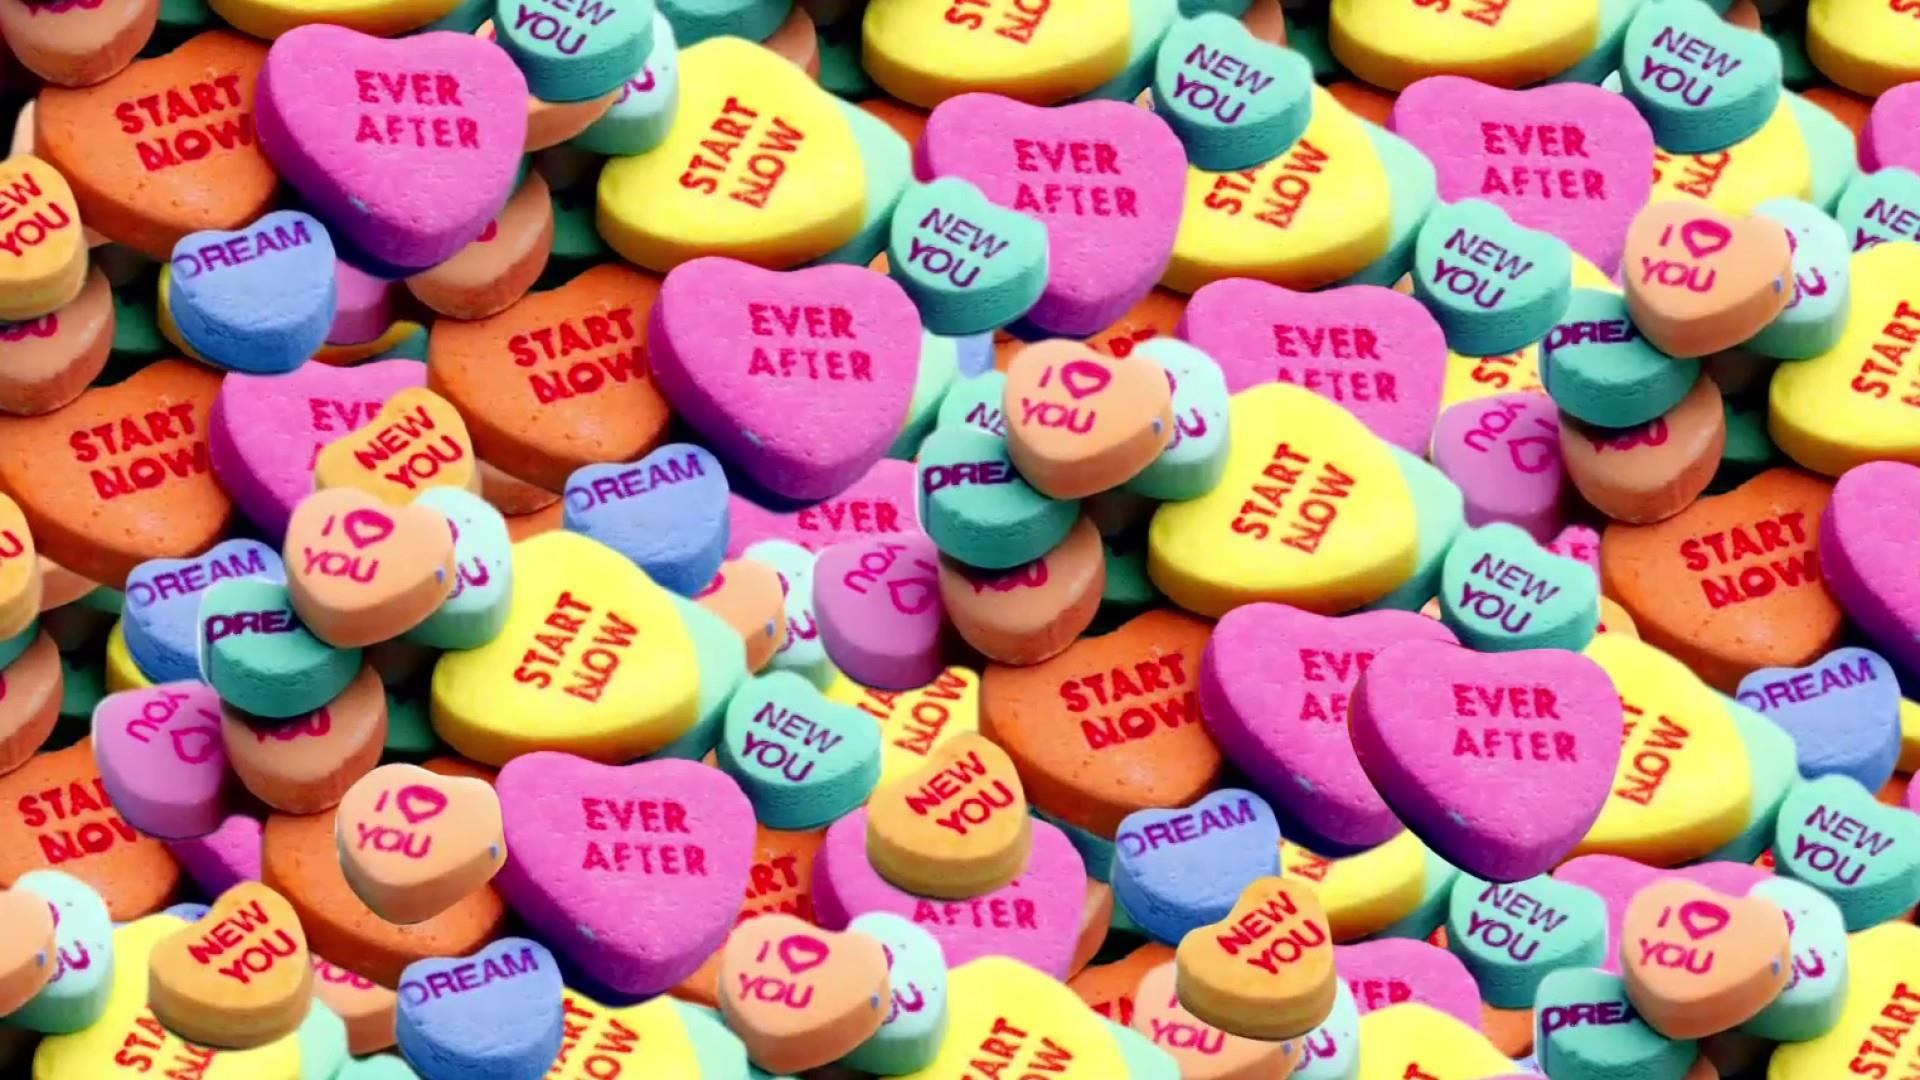 Brach's Tiny Conversation Hearts Valentine Candy, 14 oz - Pay Less